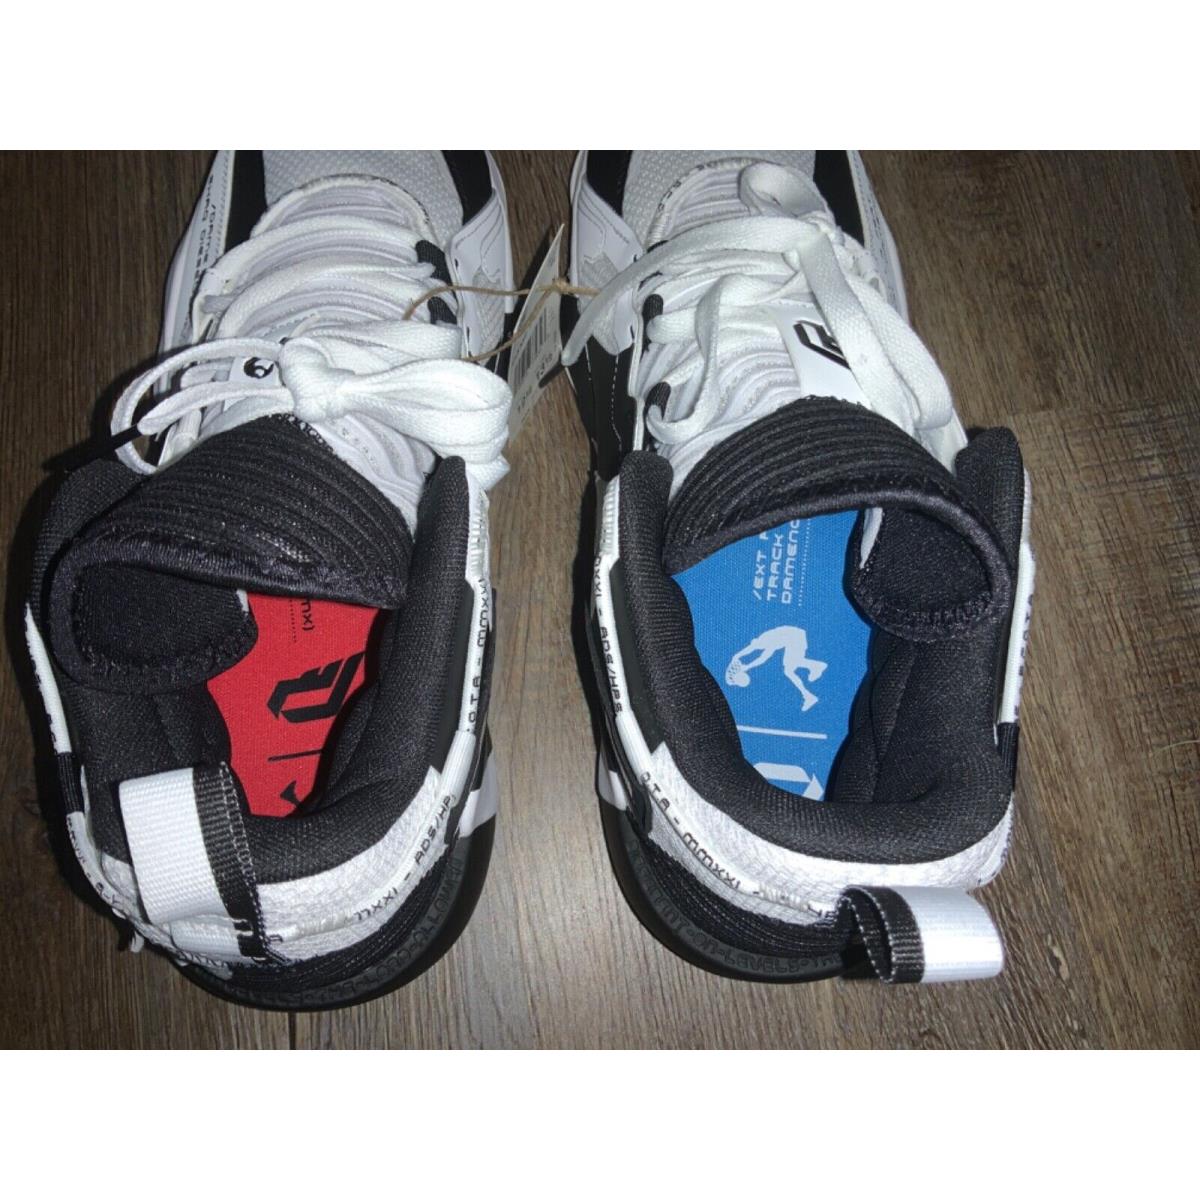 Adidas shoes Dame Lillard - White 3